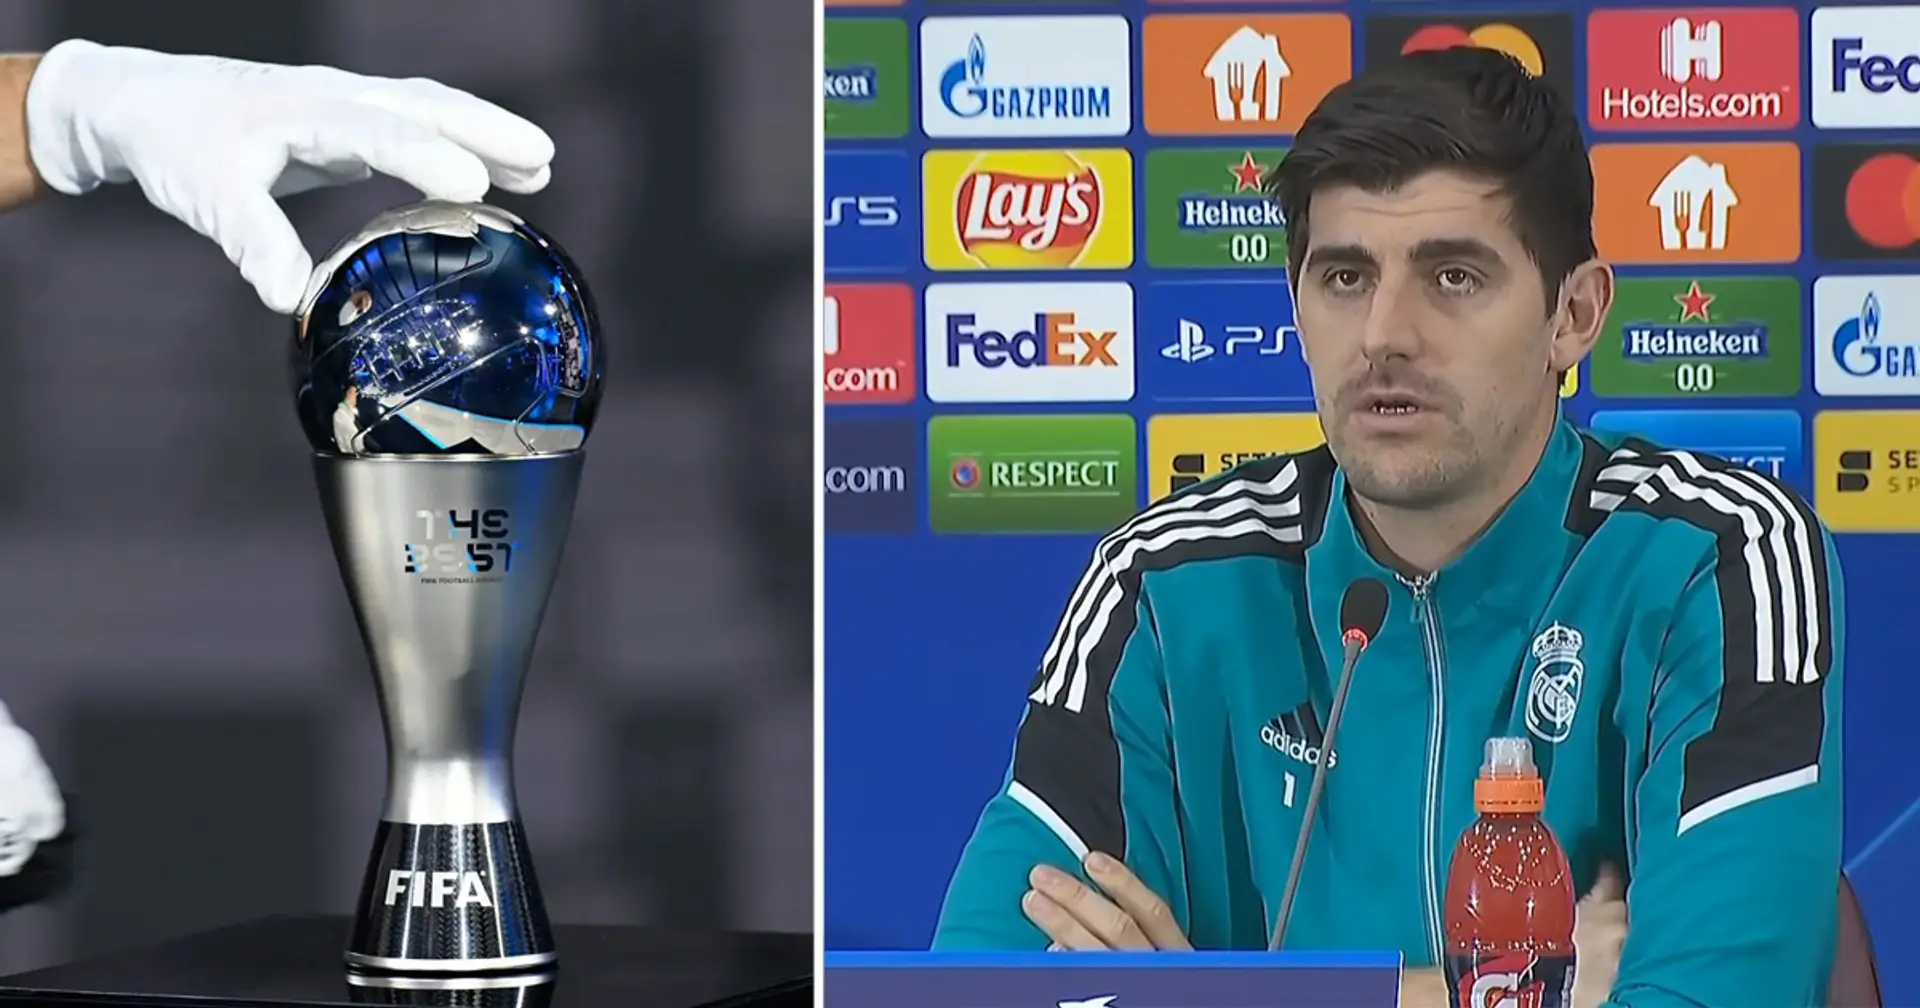 Courtois: 'I think I'm not nominated for best goalkeeper because I criticized UEFA and FIFA'